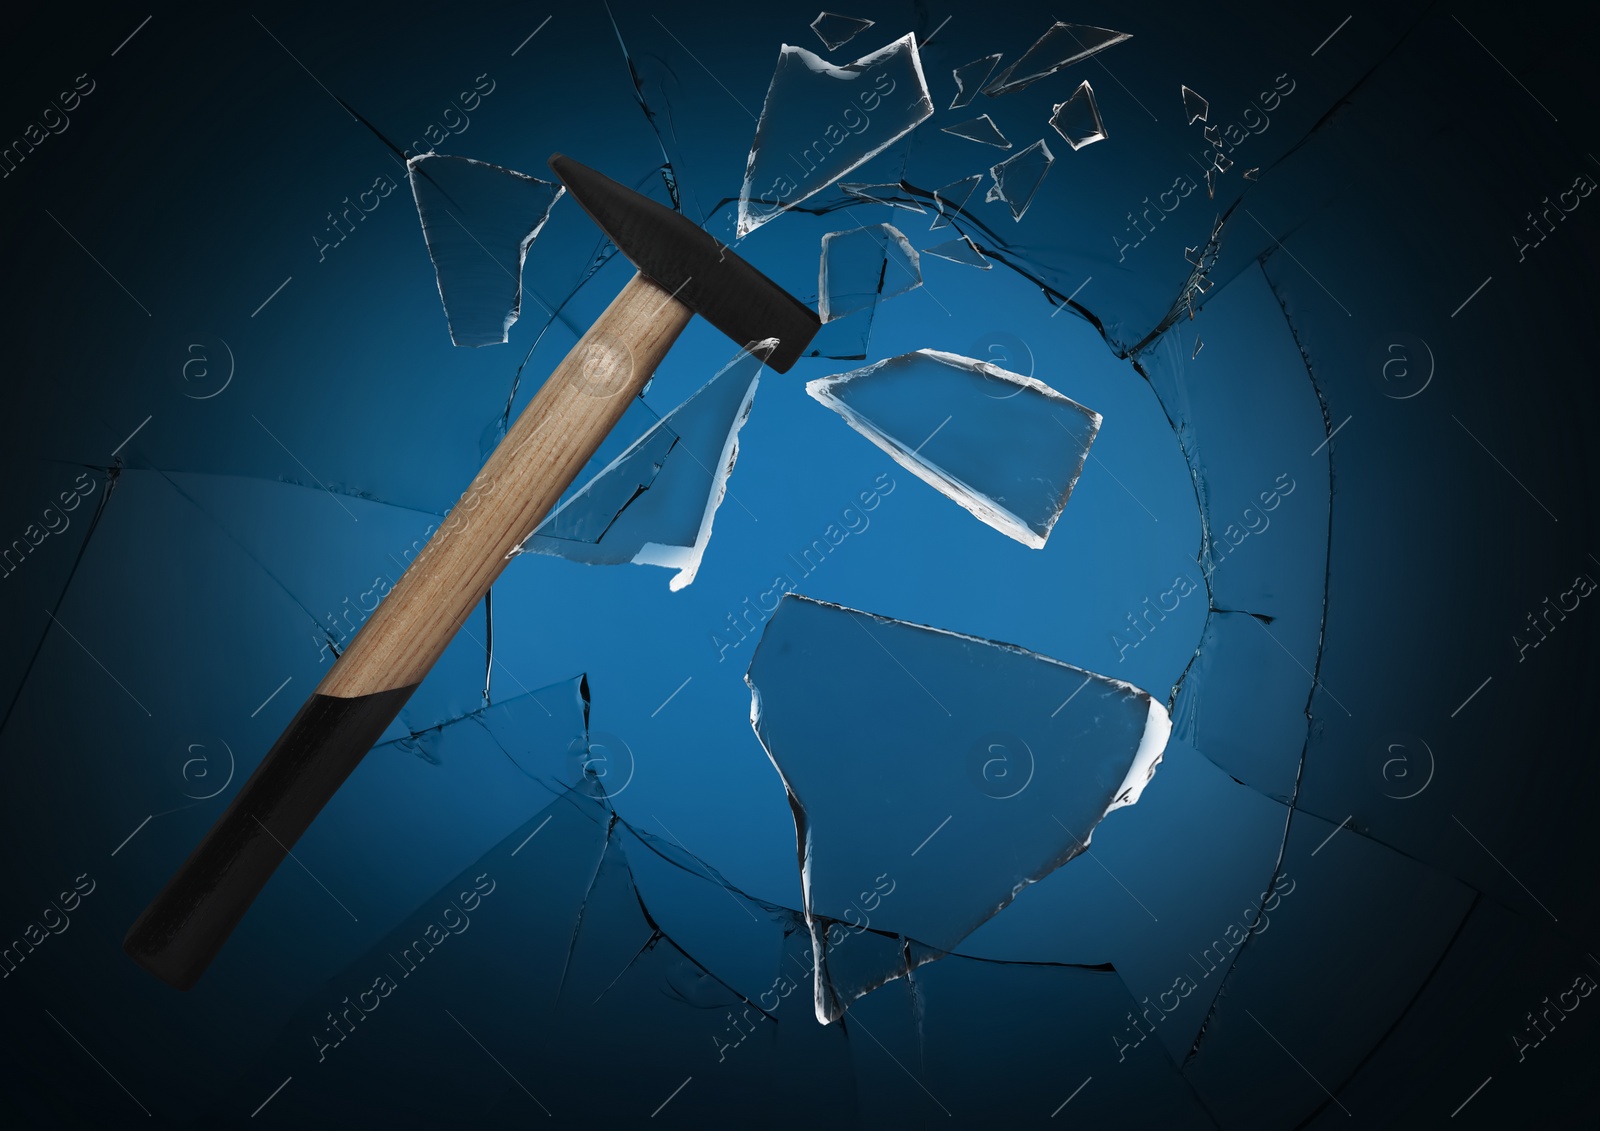 Image of Hammer breaking up glass against black background